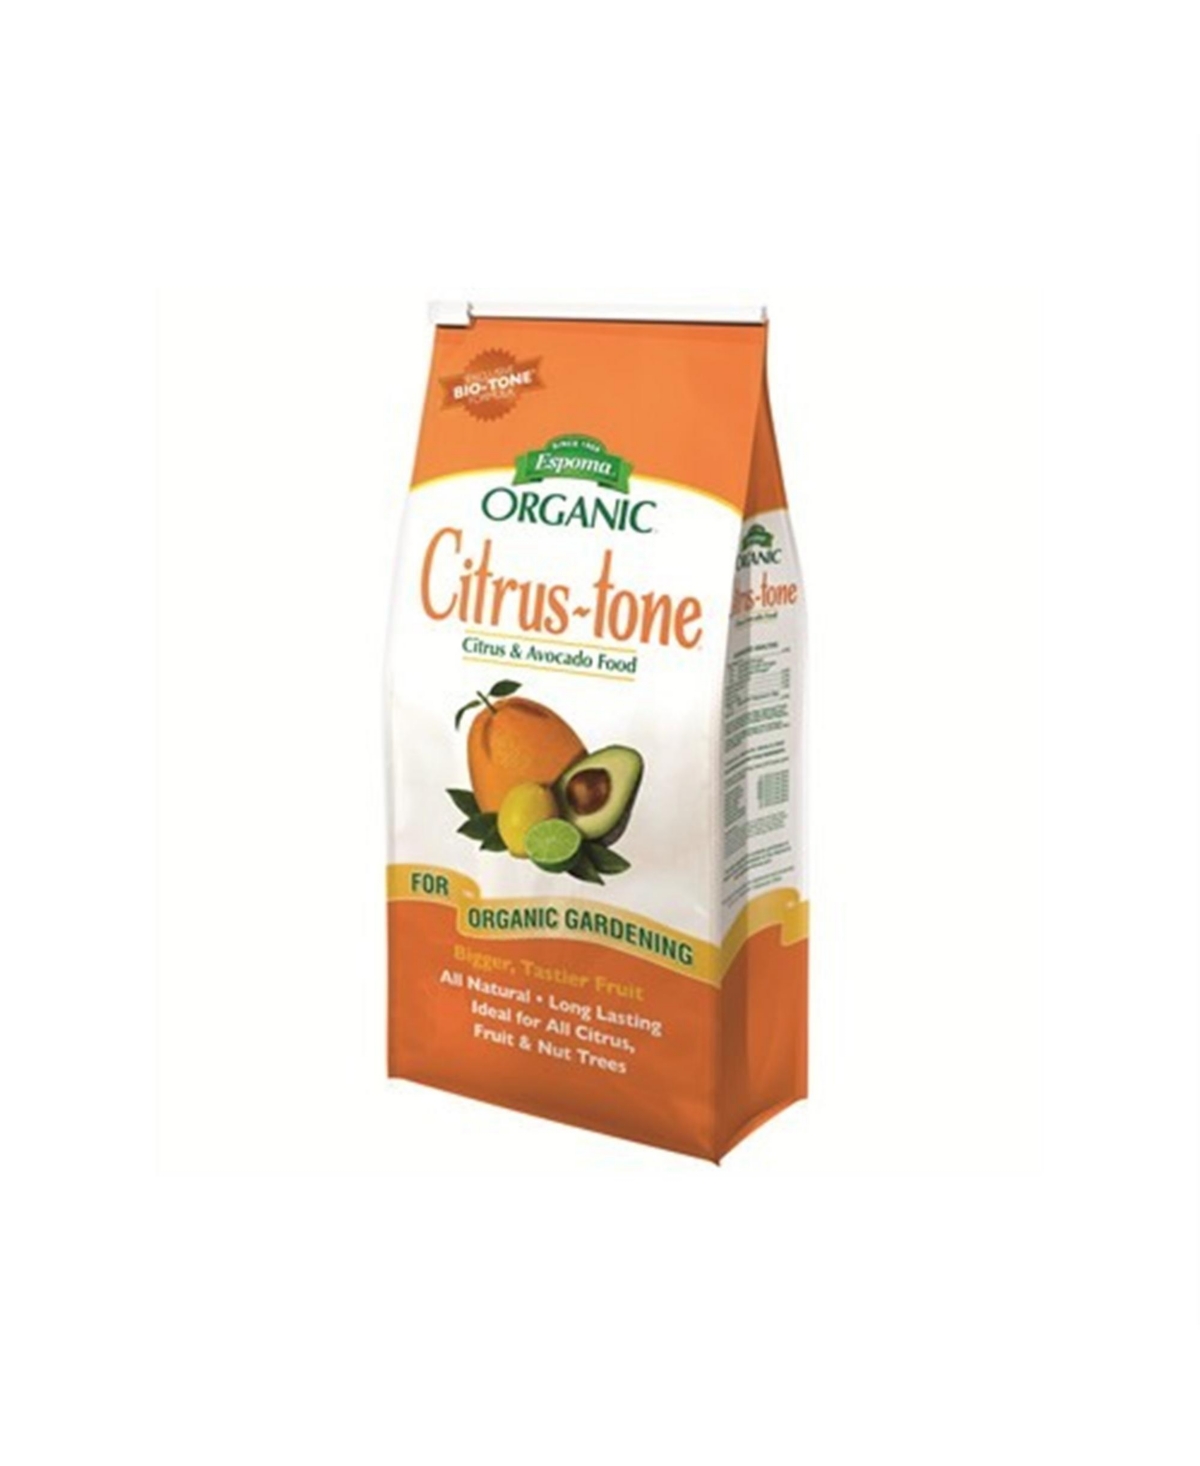 ESPCT18 Organic Citrus-Tone Citrus & Avocado Food, 18 lbsBag - Open Miscellaneous